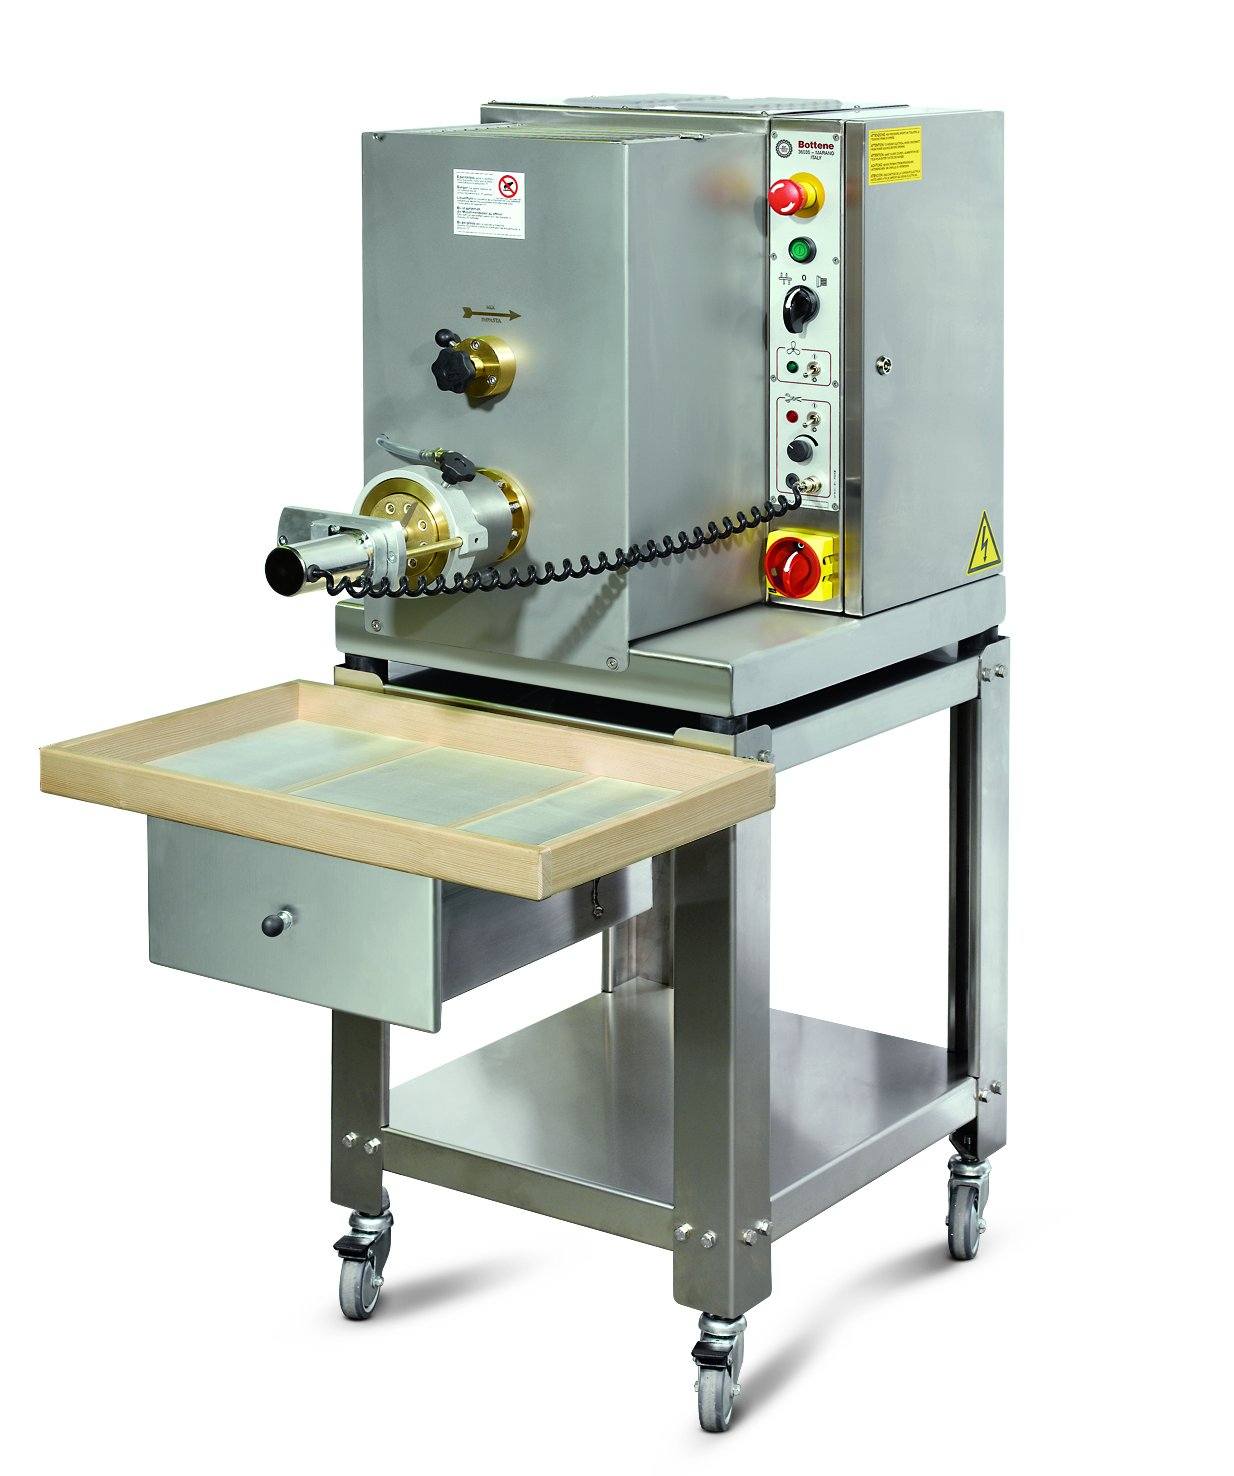 Bottene Lillo Due Italy Electric Pasta Noodle Extruder Machine